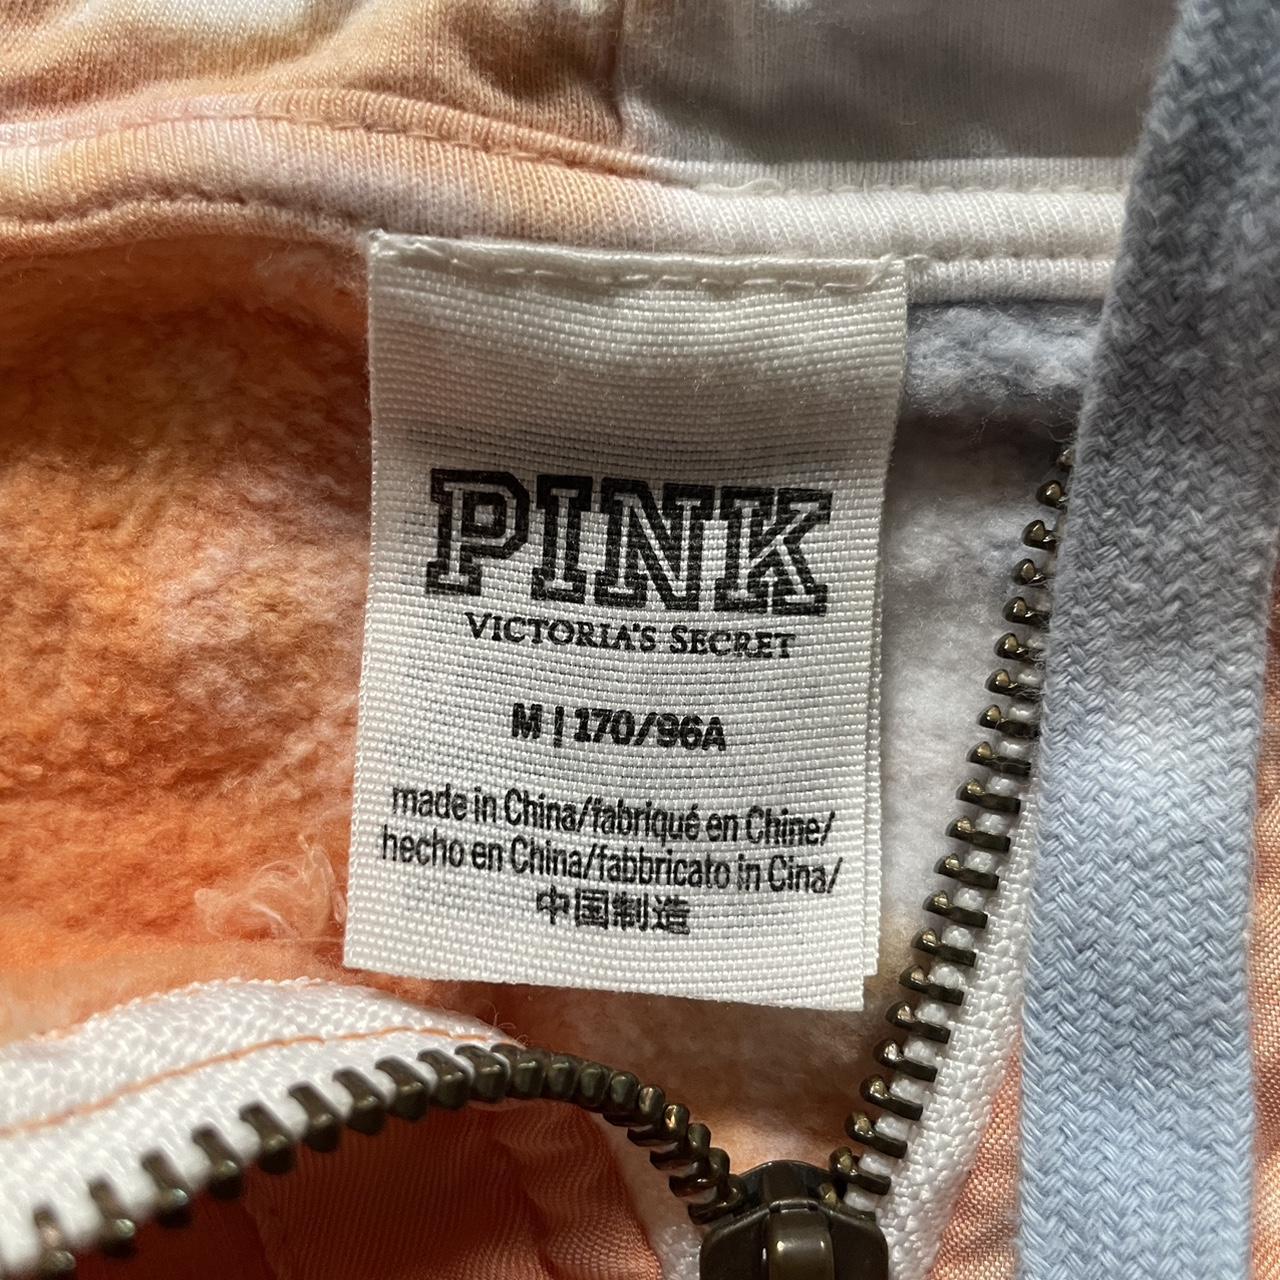 Victoria's Secret PINK tie dye orange and pink - Depop